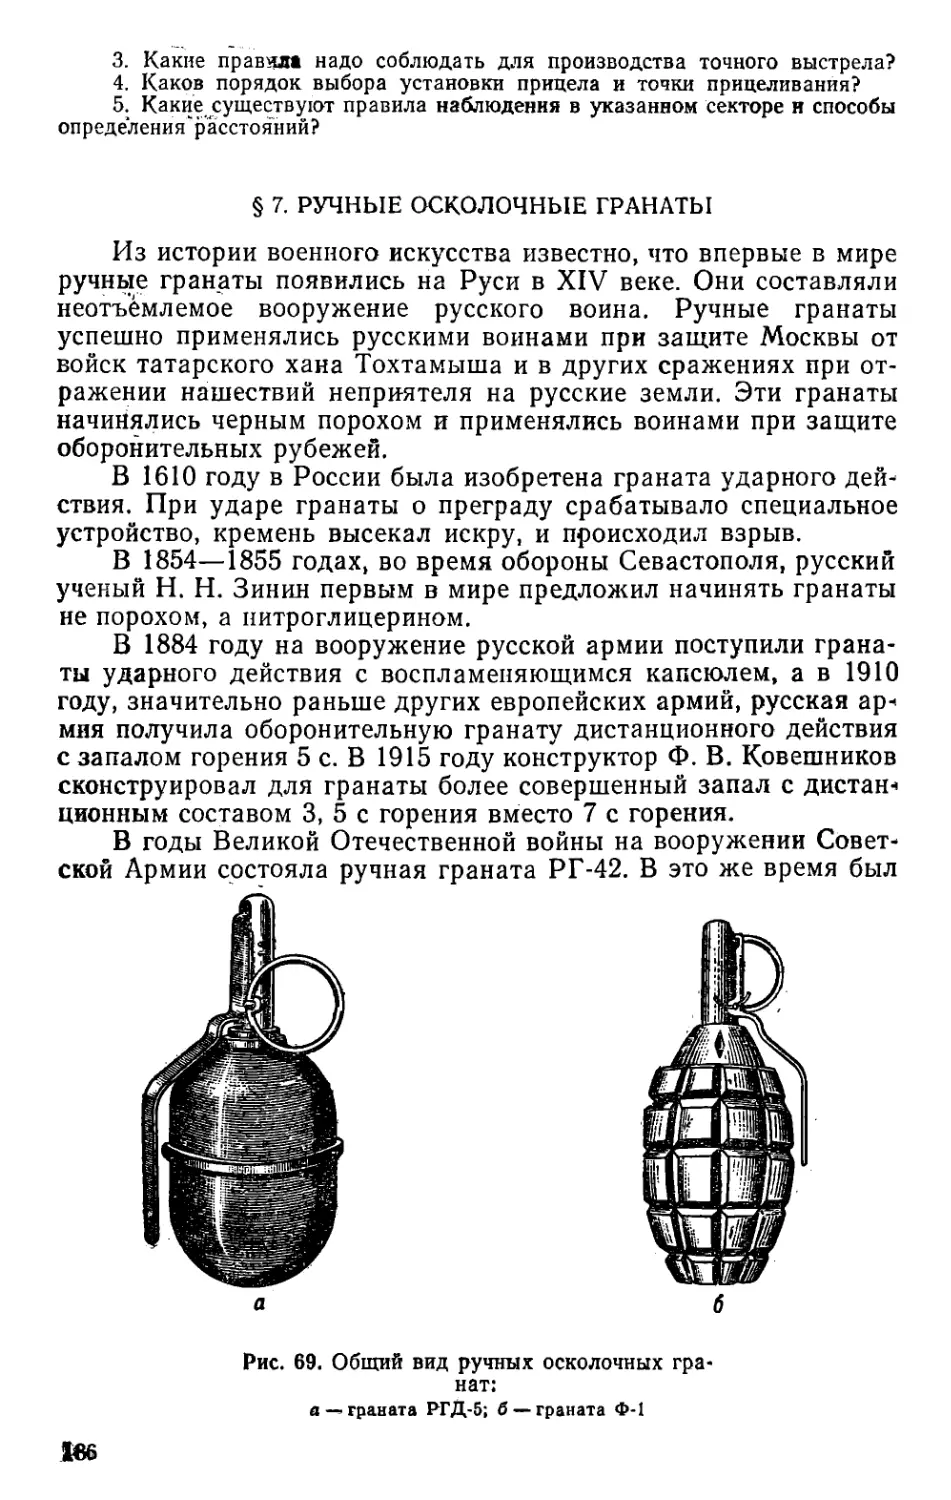 § 7. Ручные осколочные гранаты